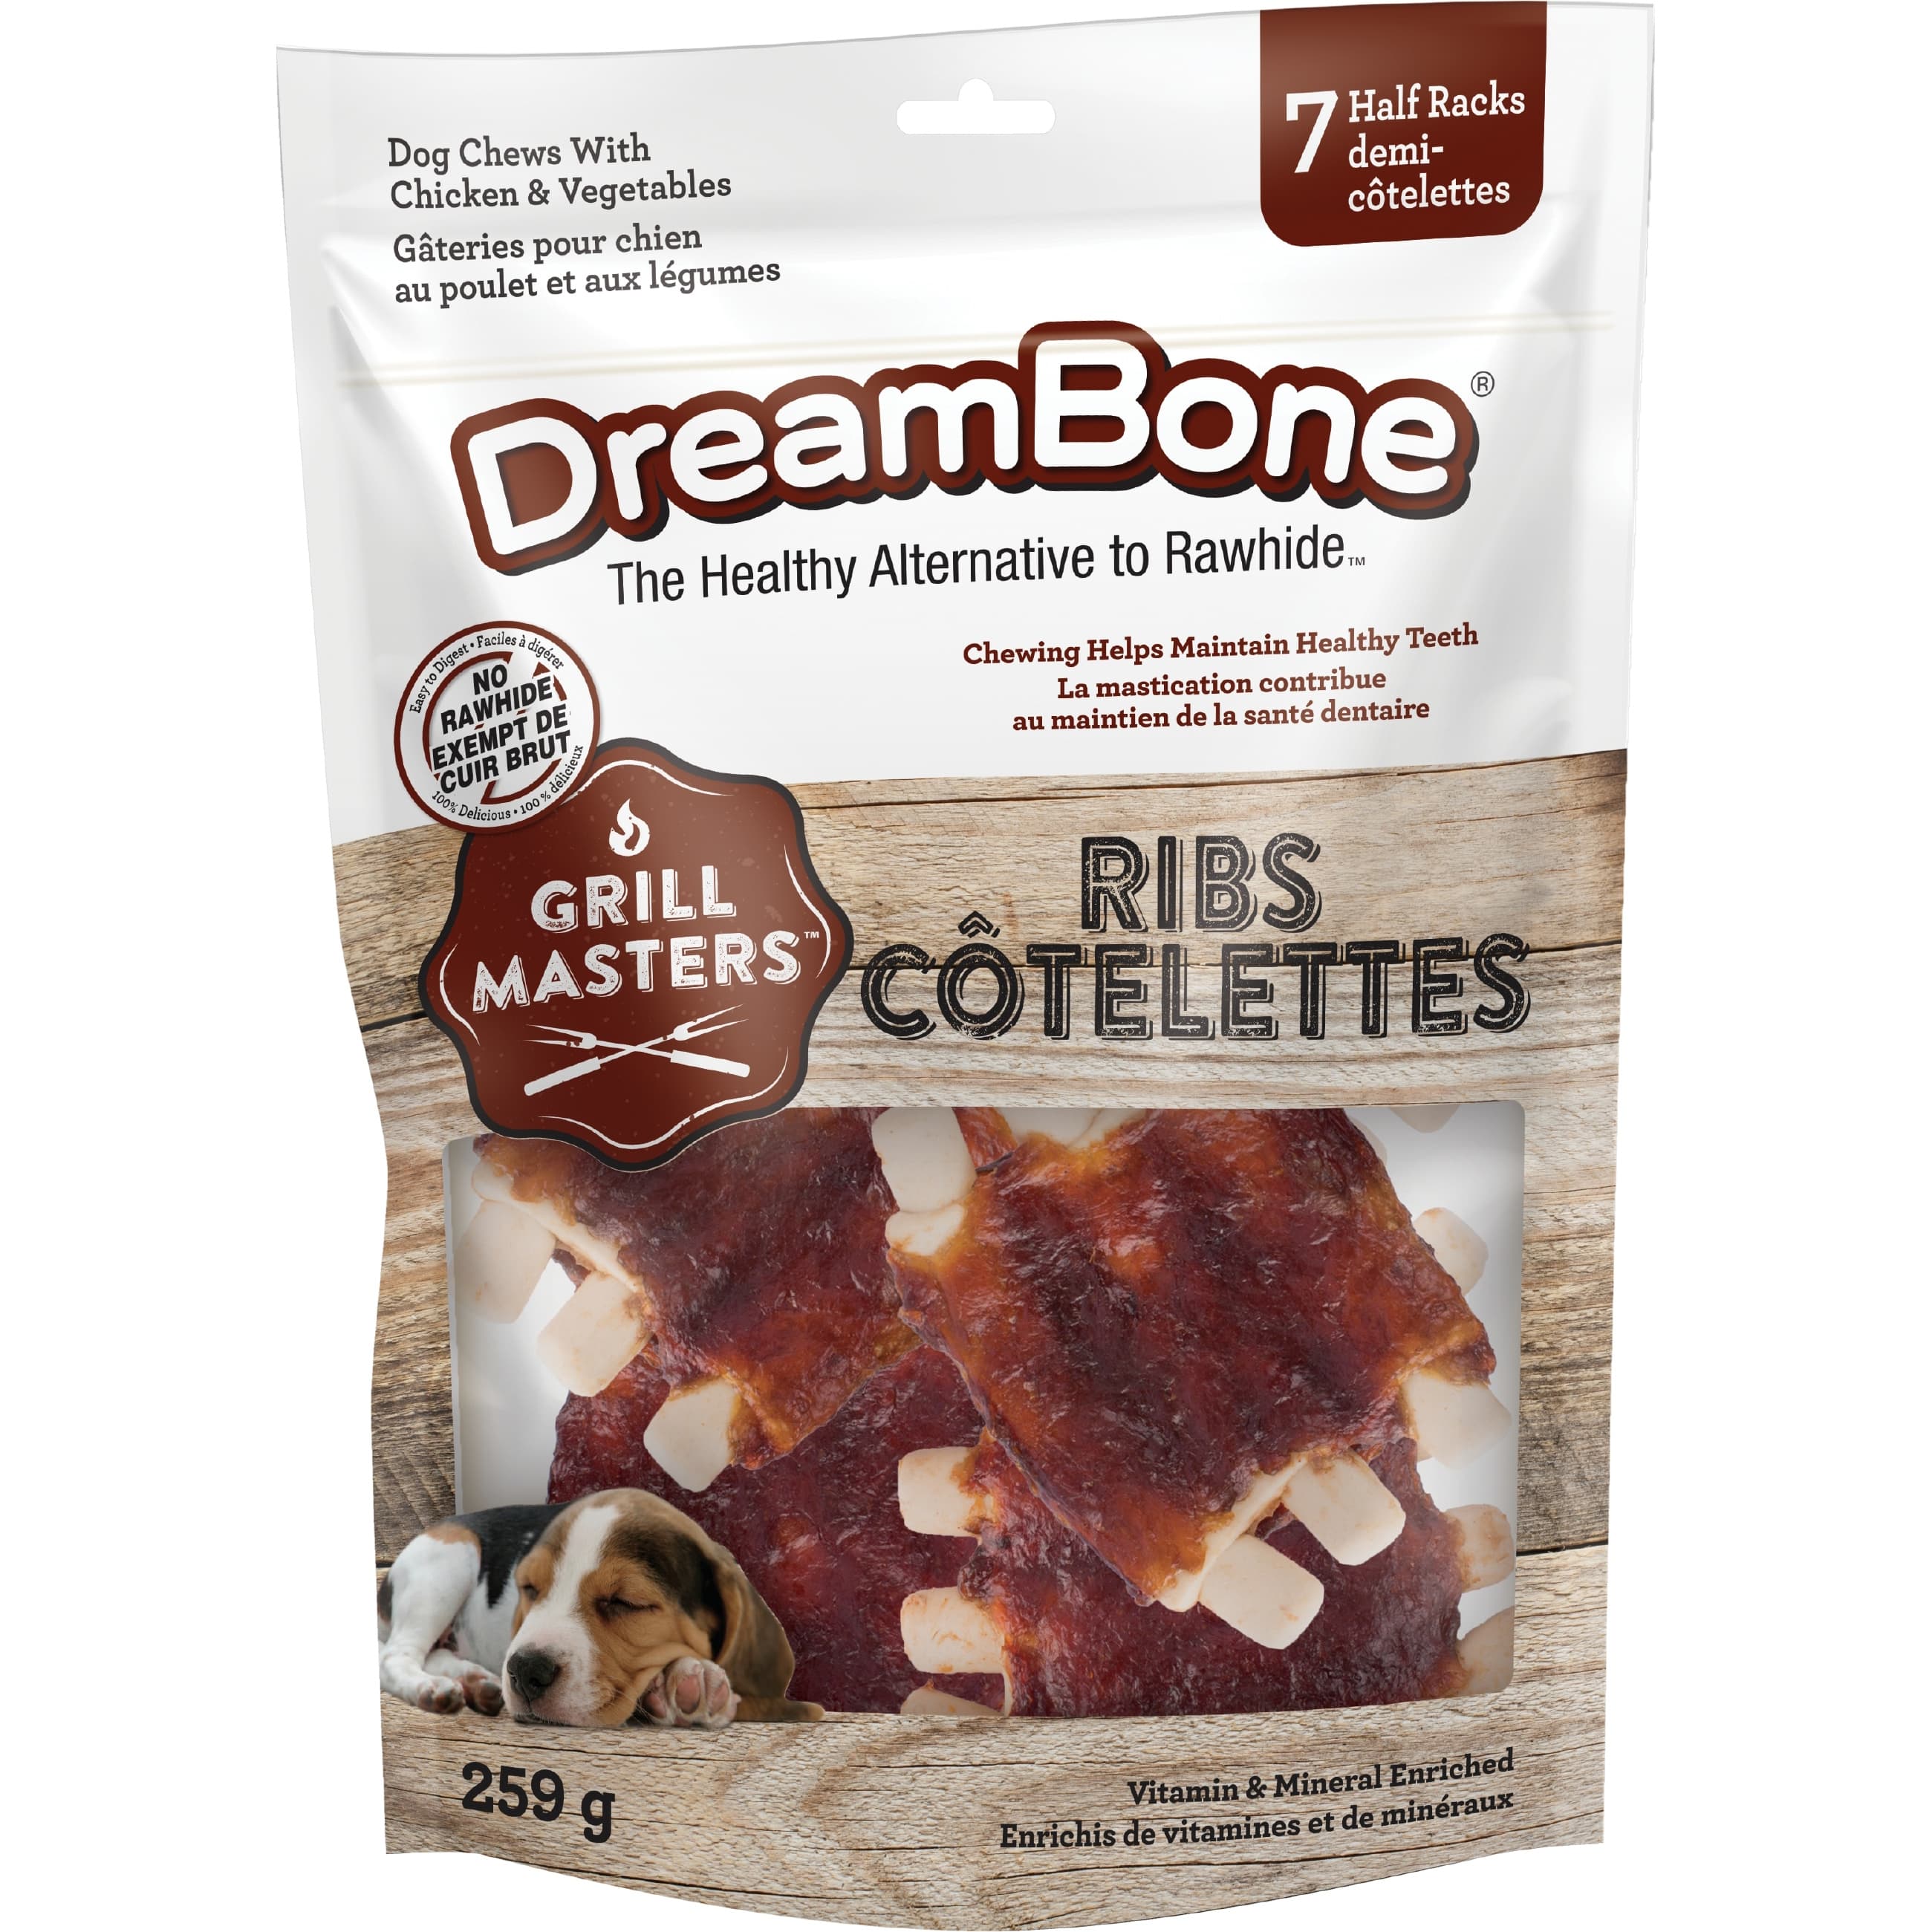 DreamBone Grill Masters Ribs, No-Rawhide Chews for Dogs – 7 Half Racks